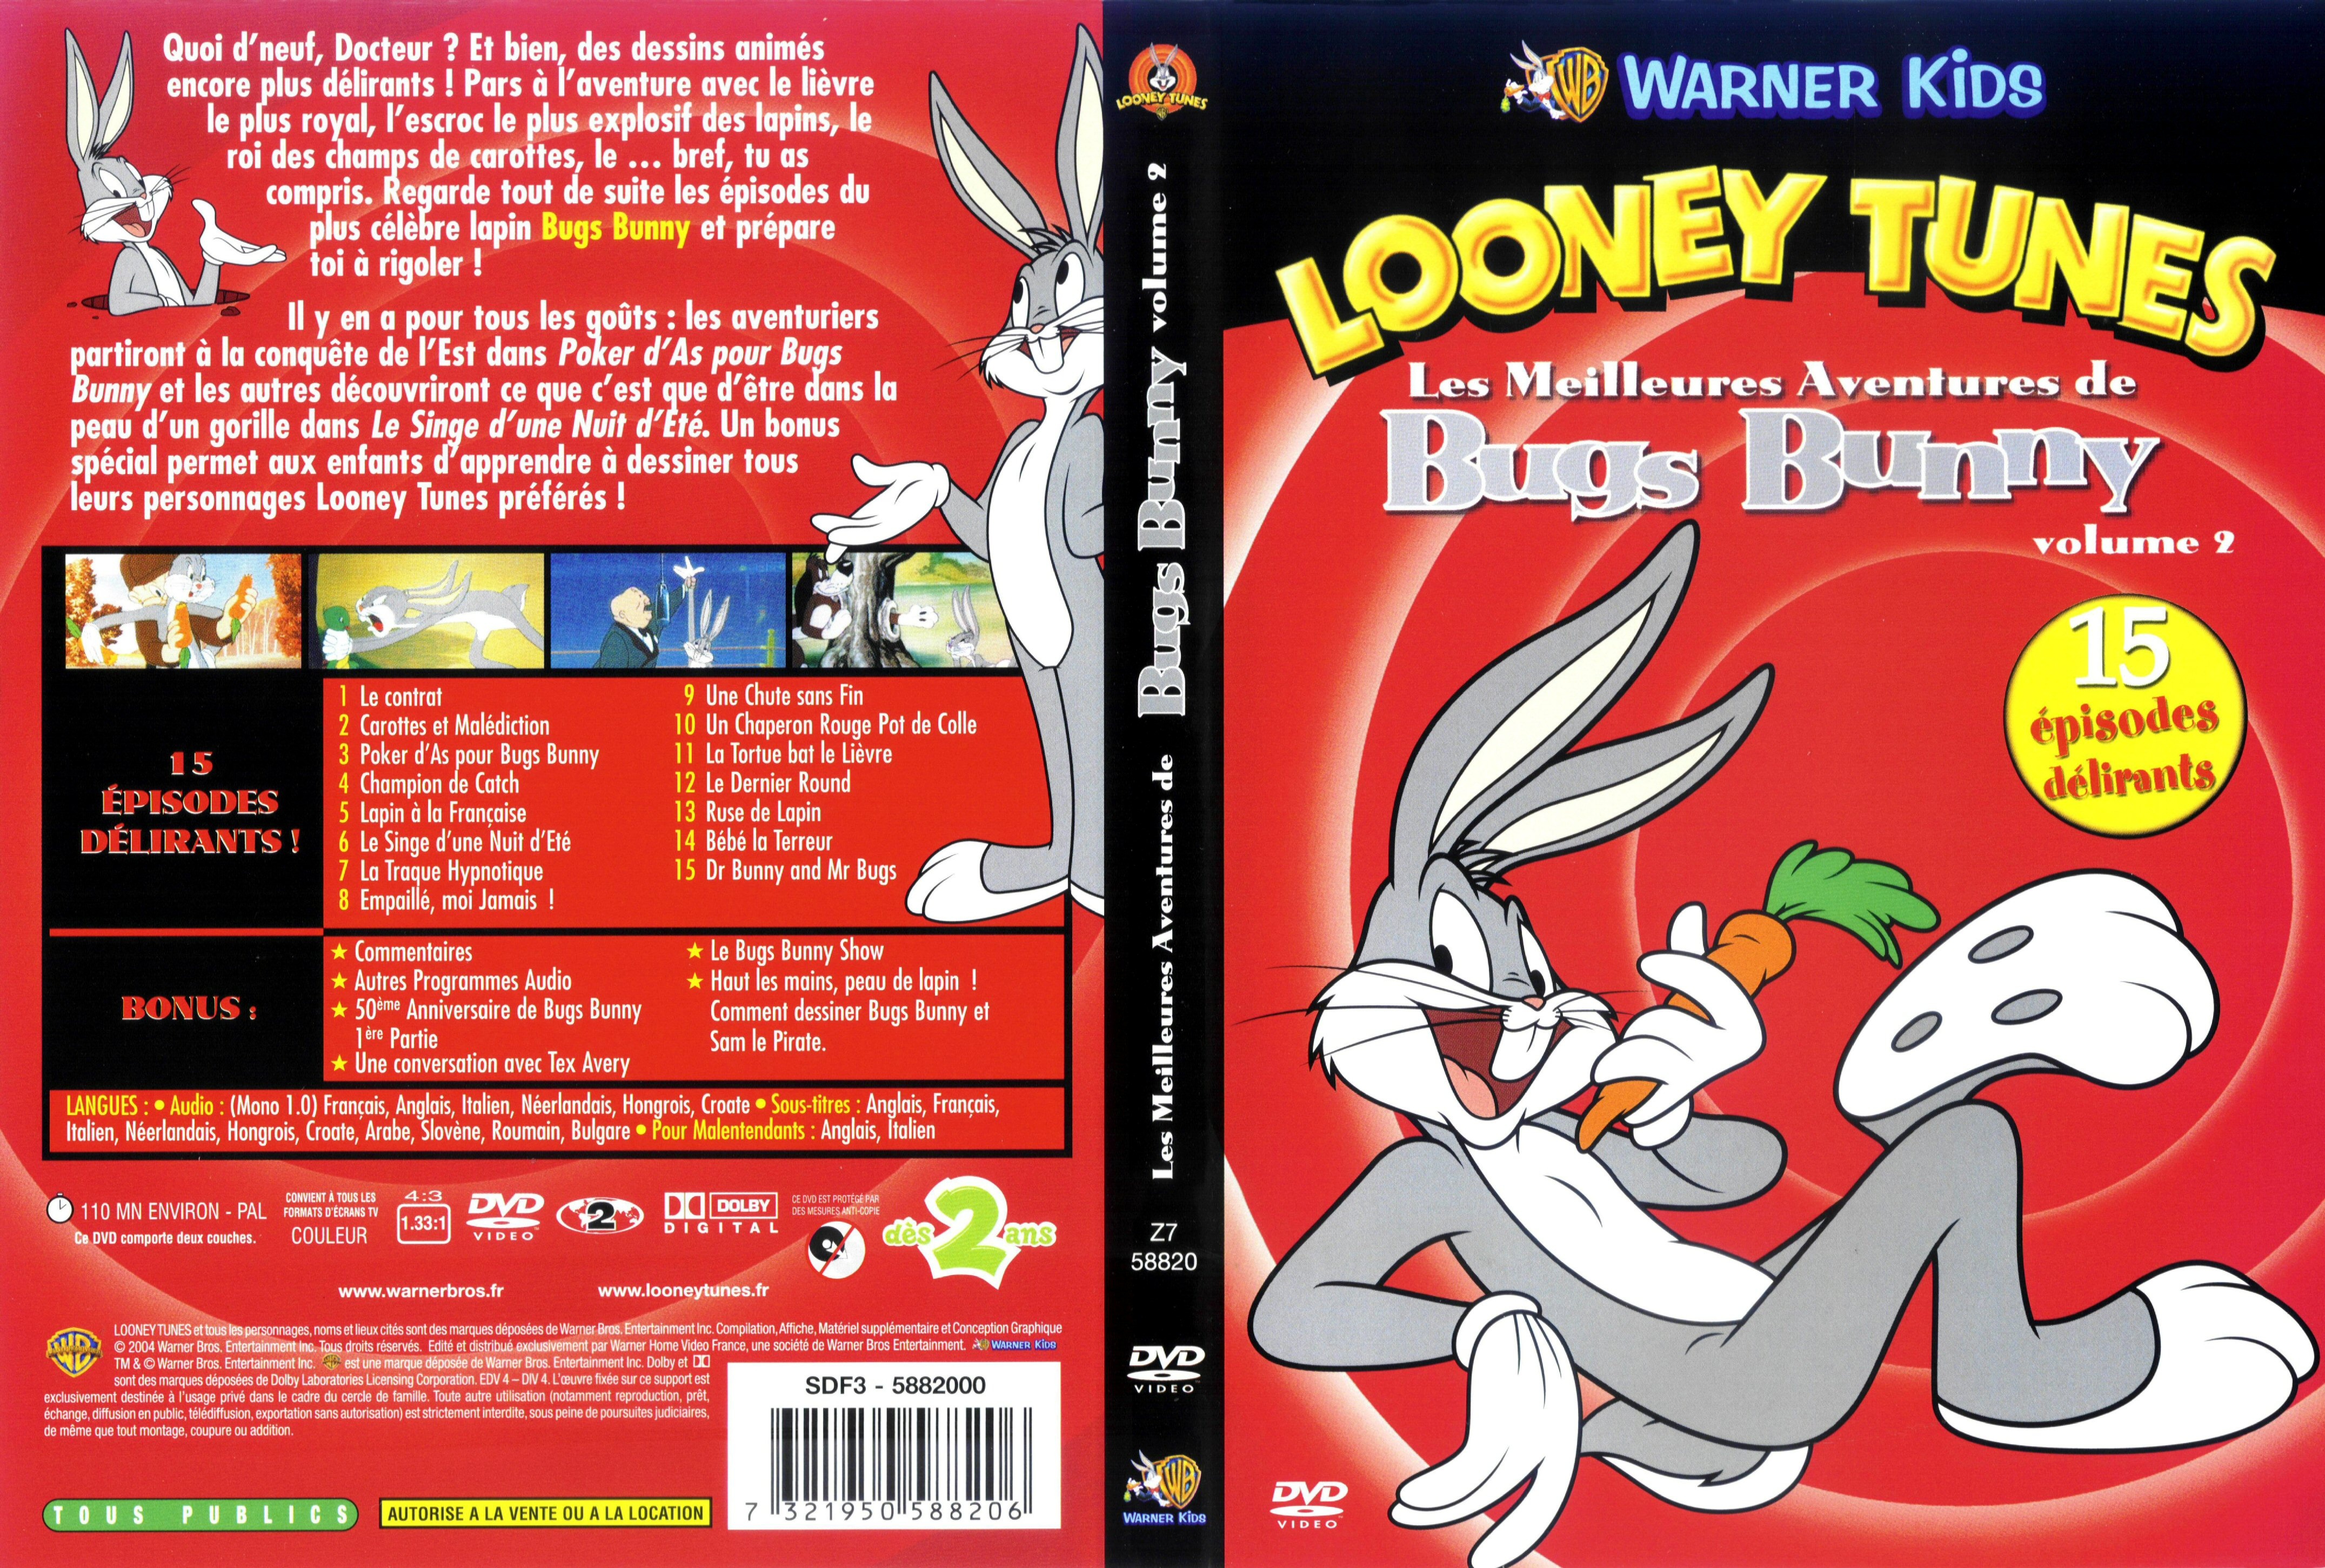 Jaquette DVD Looney tunes Les meilleures aventures de Bugs Bunny vol 2